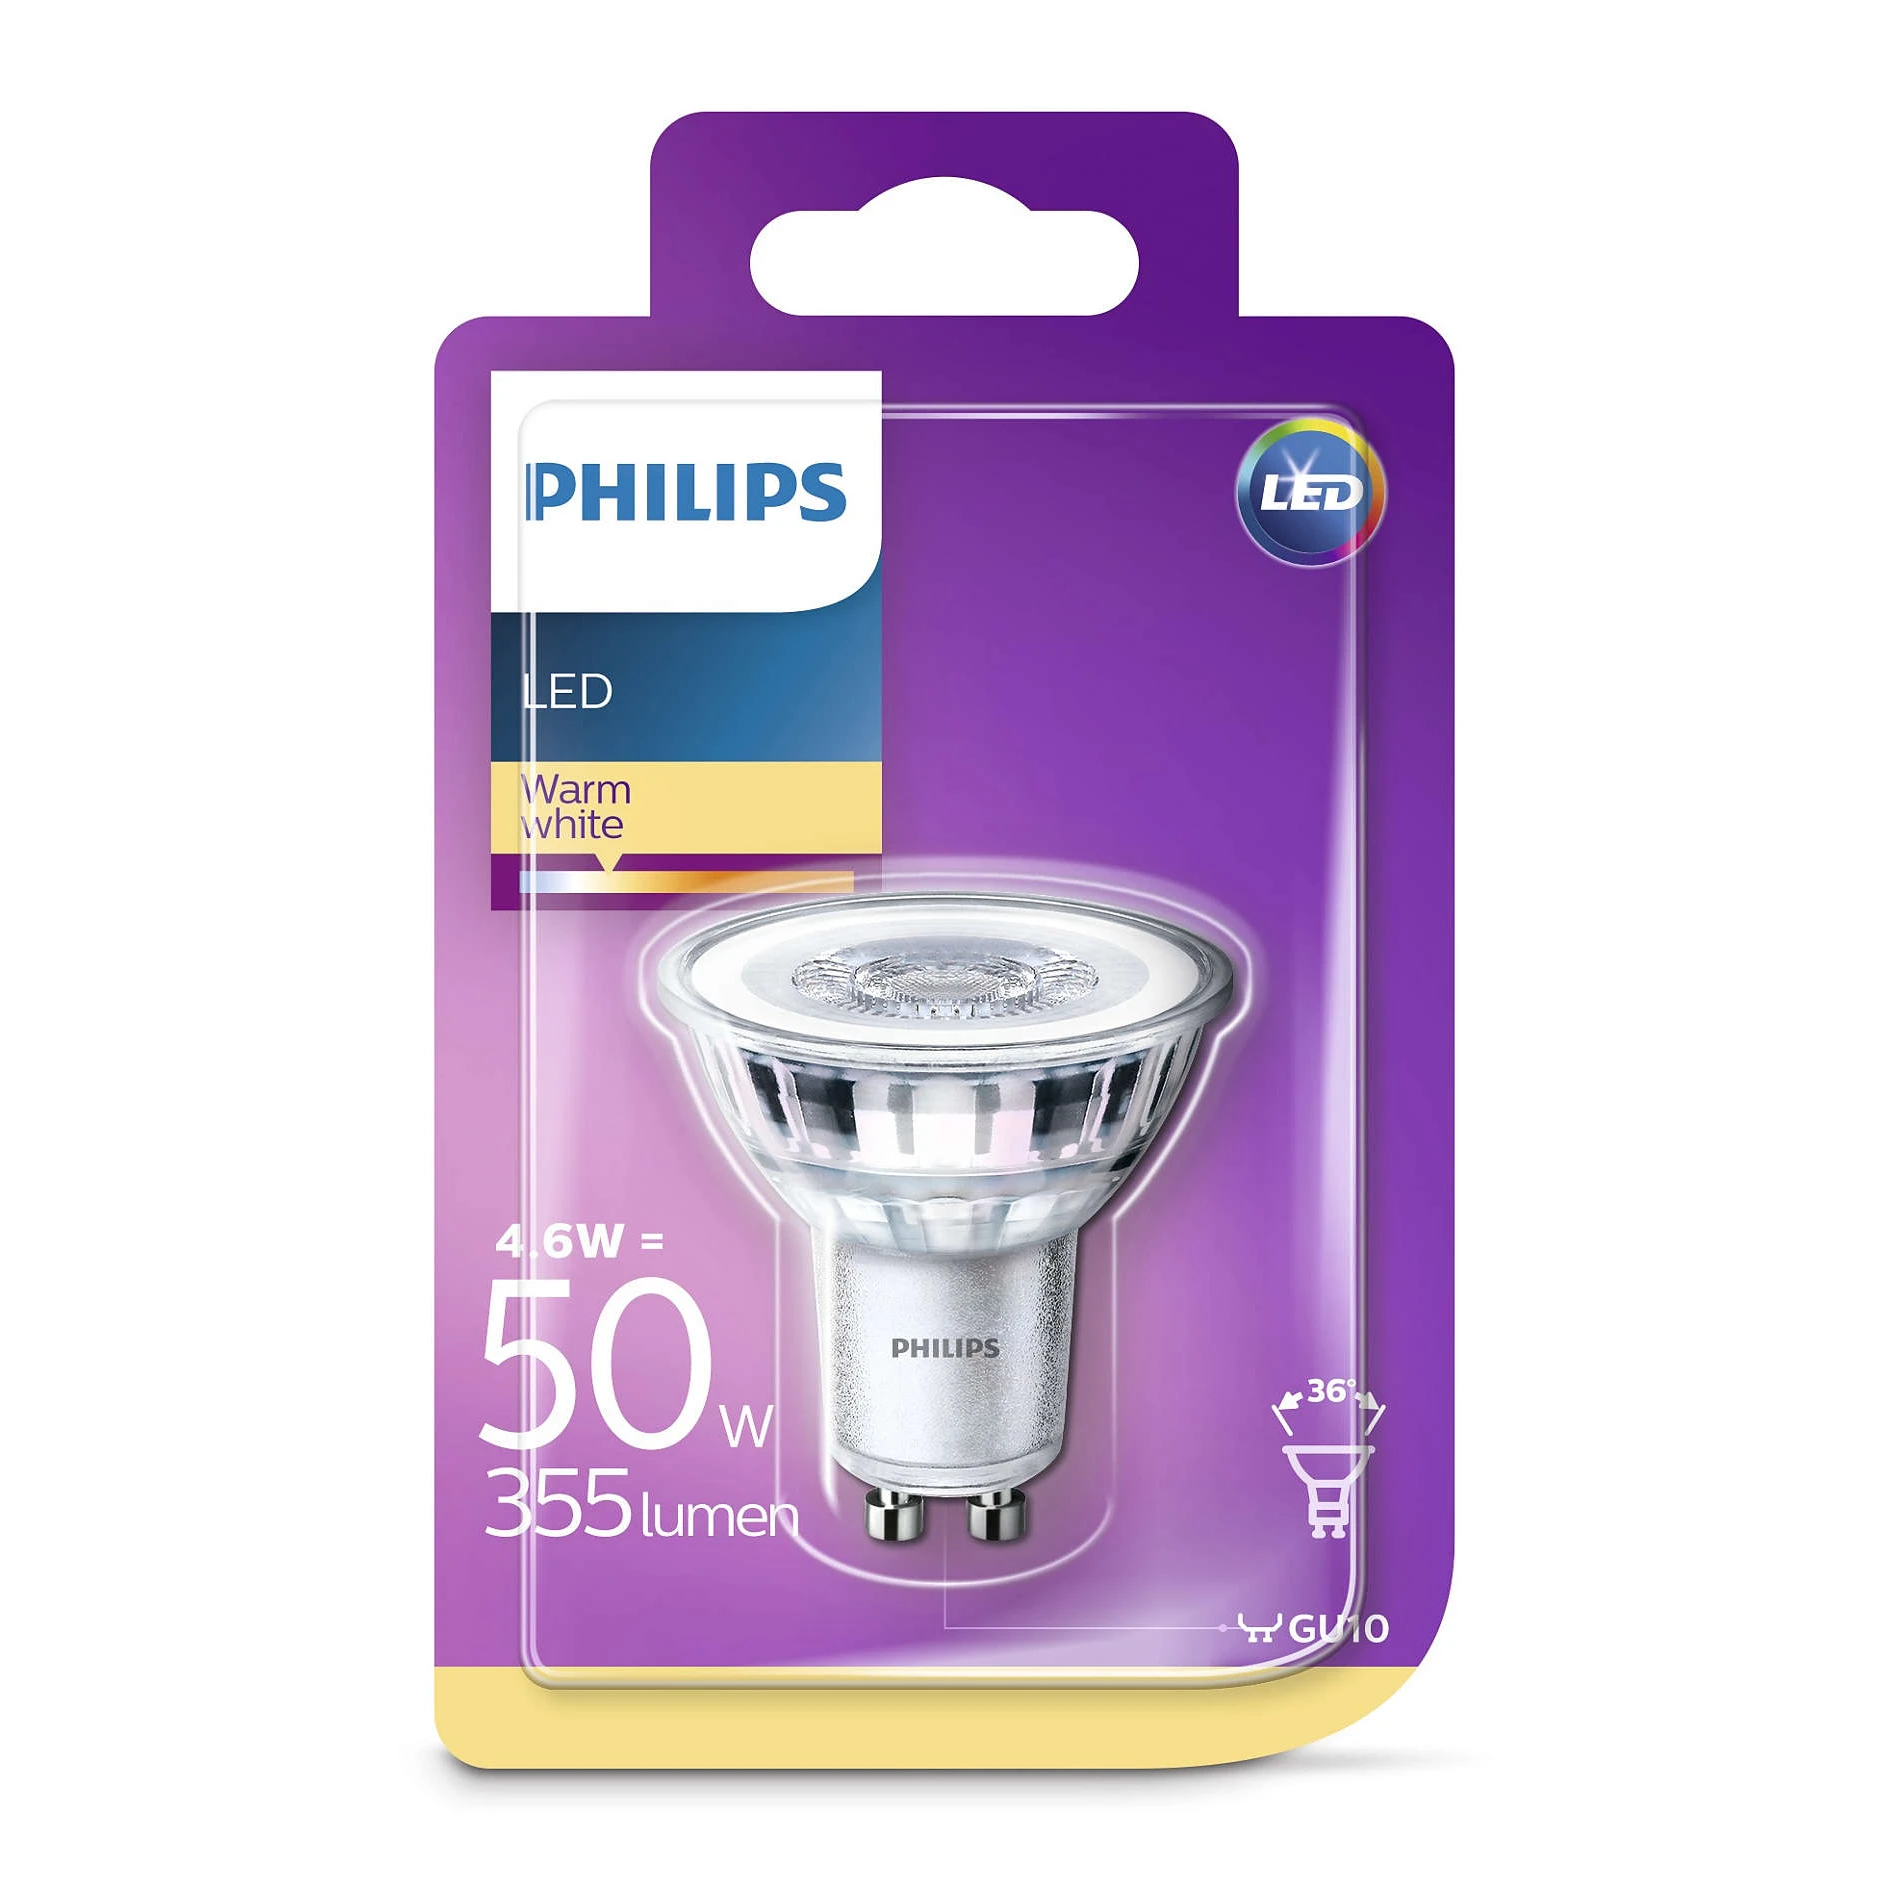 akavet Romantik desillusion Bulb LED 4,6W (50W/355lm) GU10 - Philips - Buy online